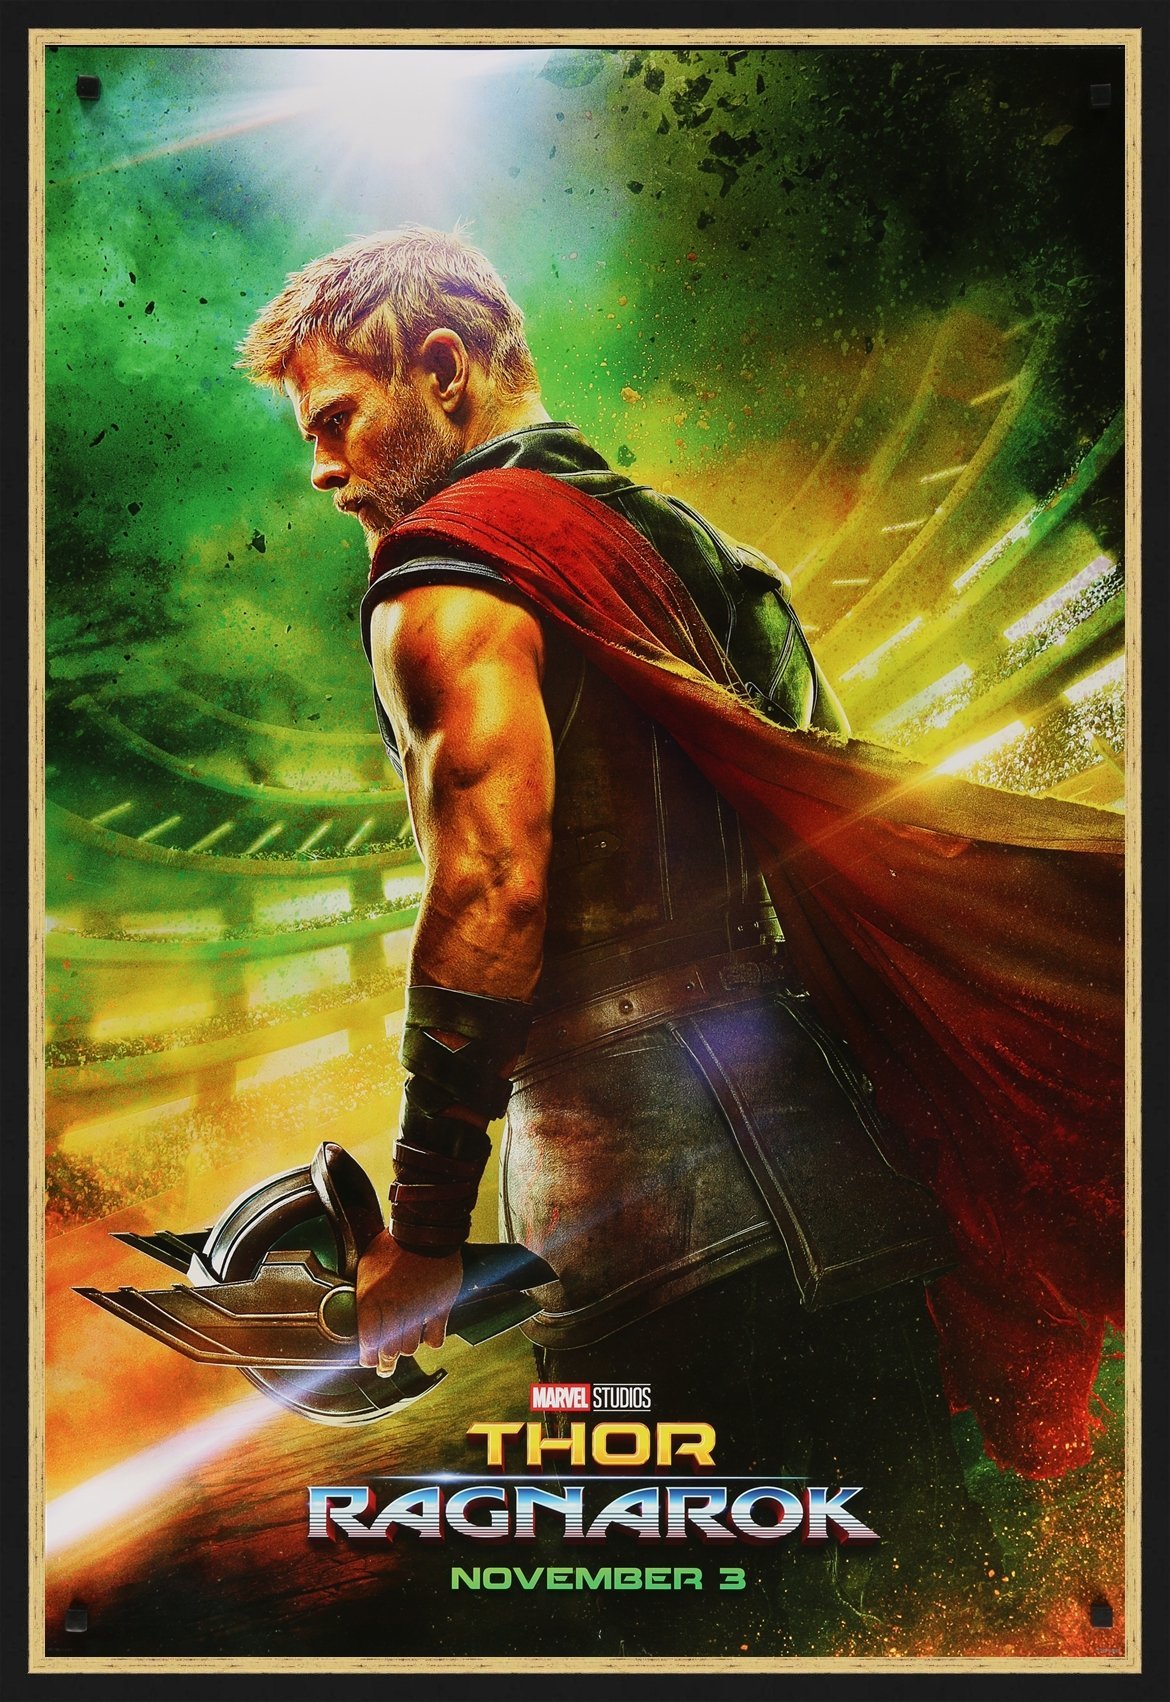 An original movie poster for the Marvel film Thor : Ragnarok